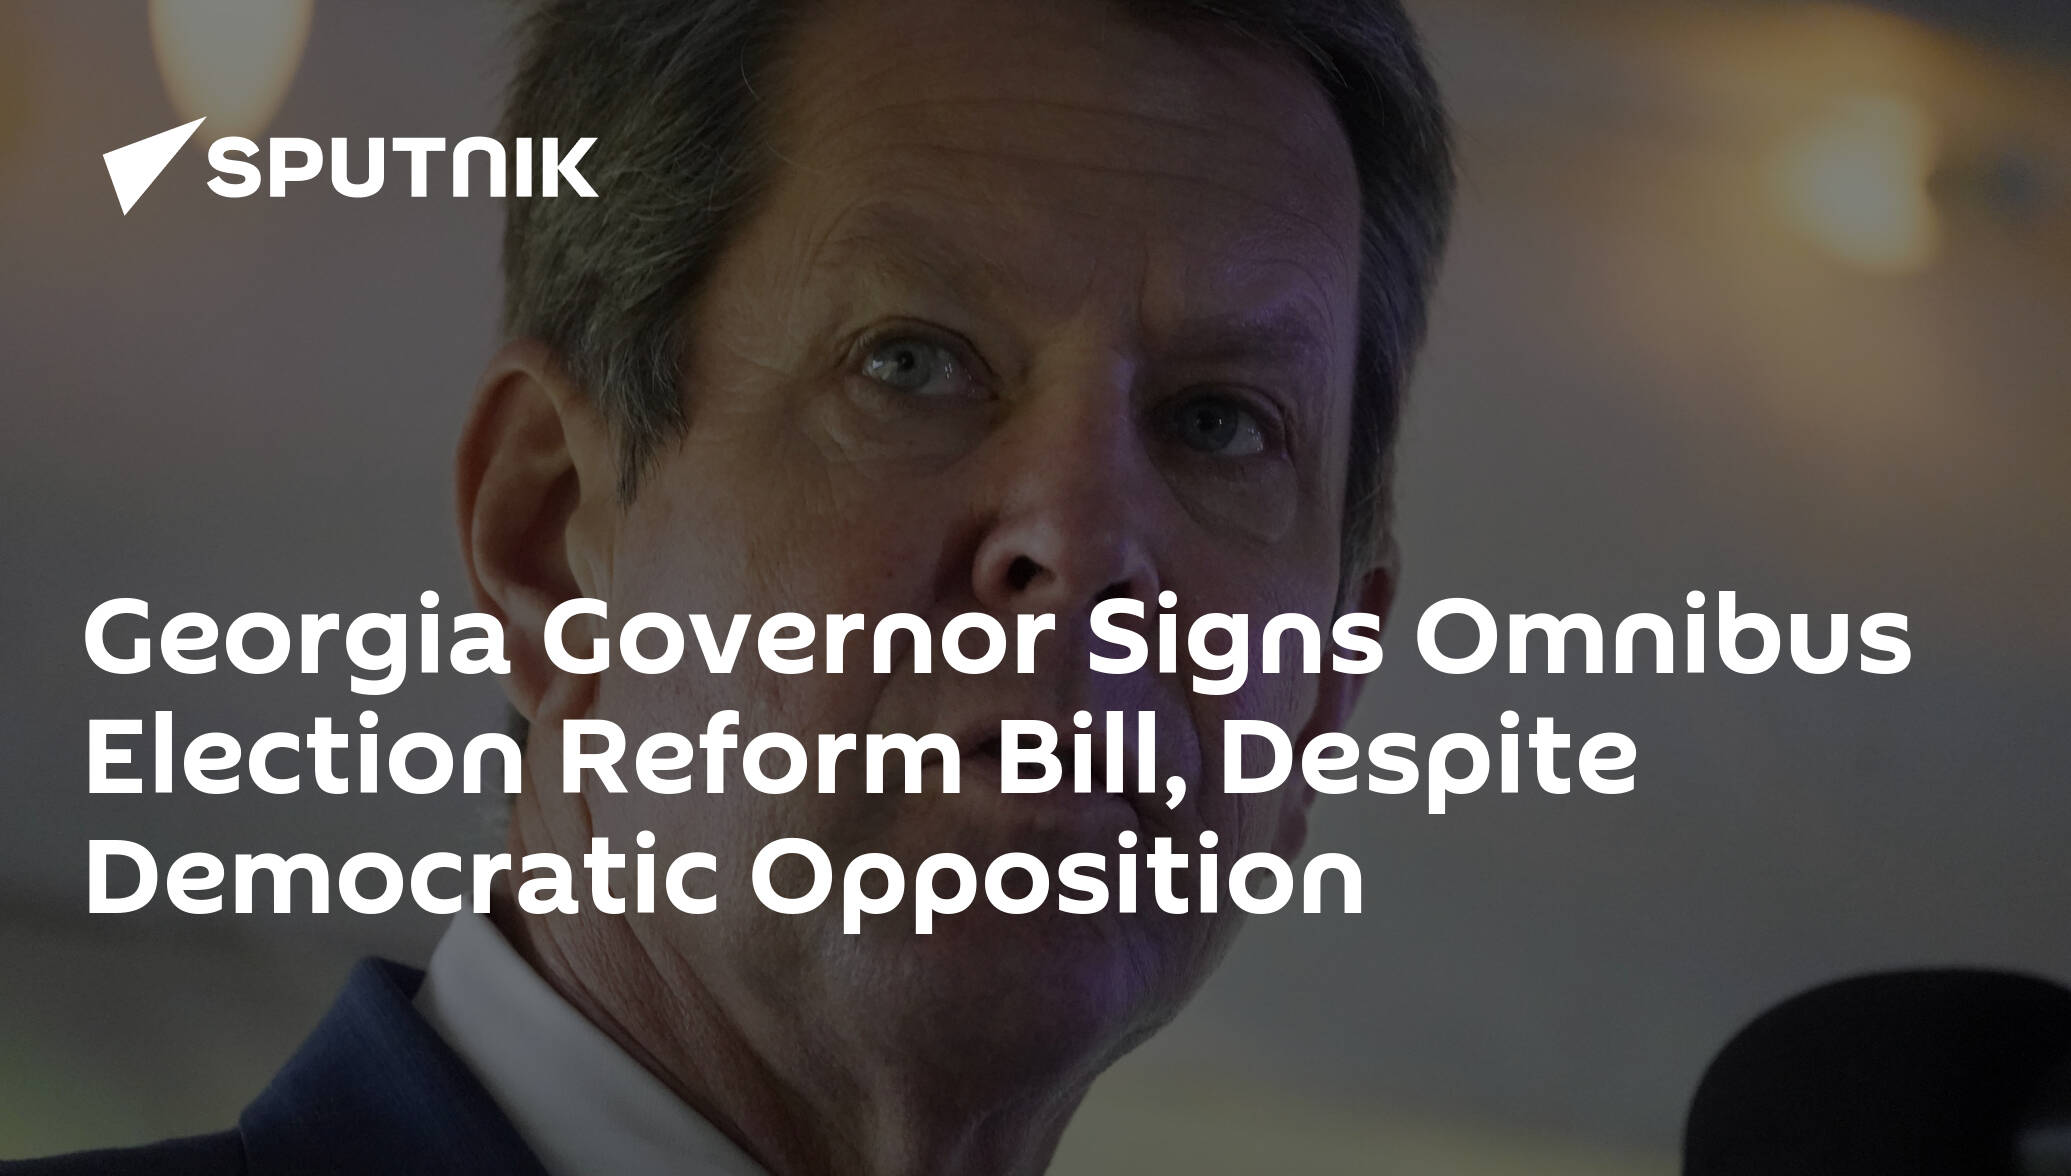 Georgia Governor Signs Omnibus Election Reform Bill Despite Democratic Opposition 7988